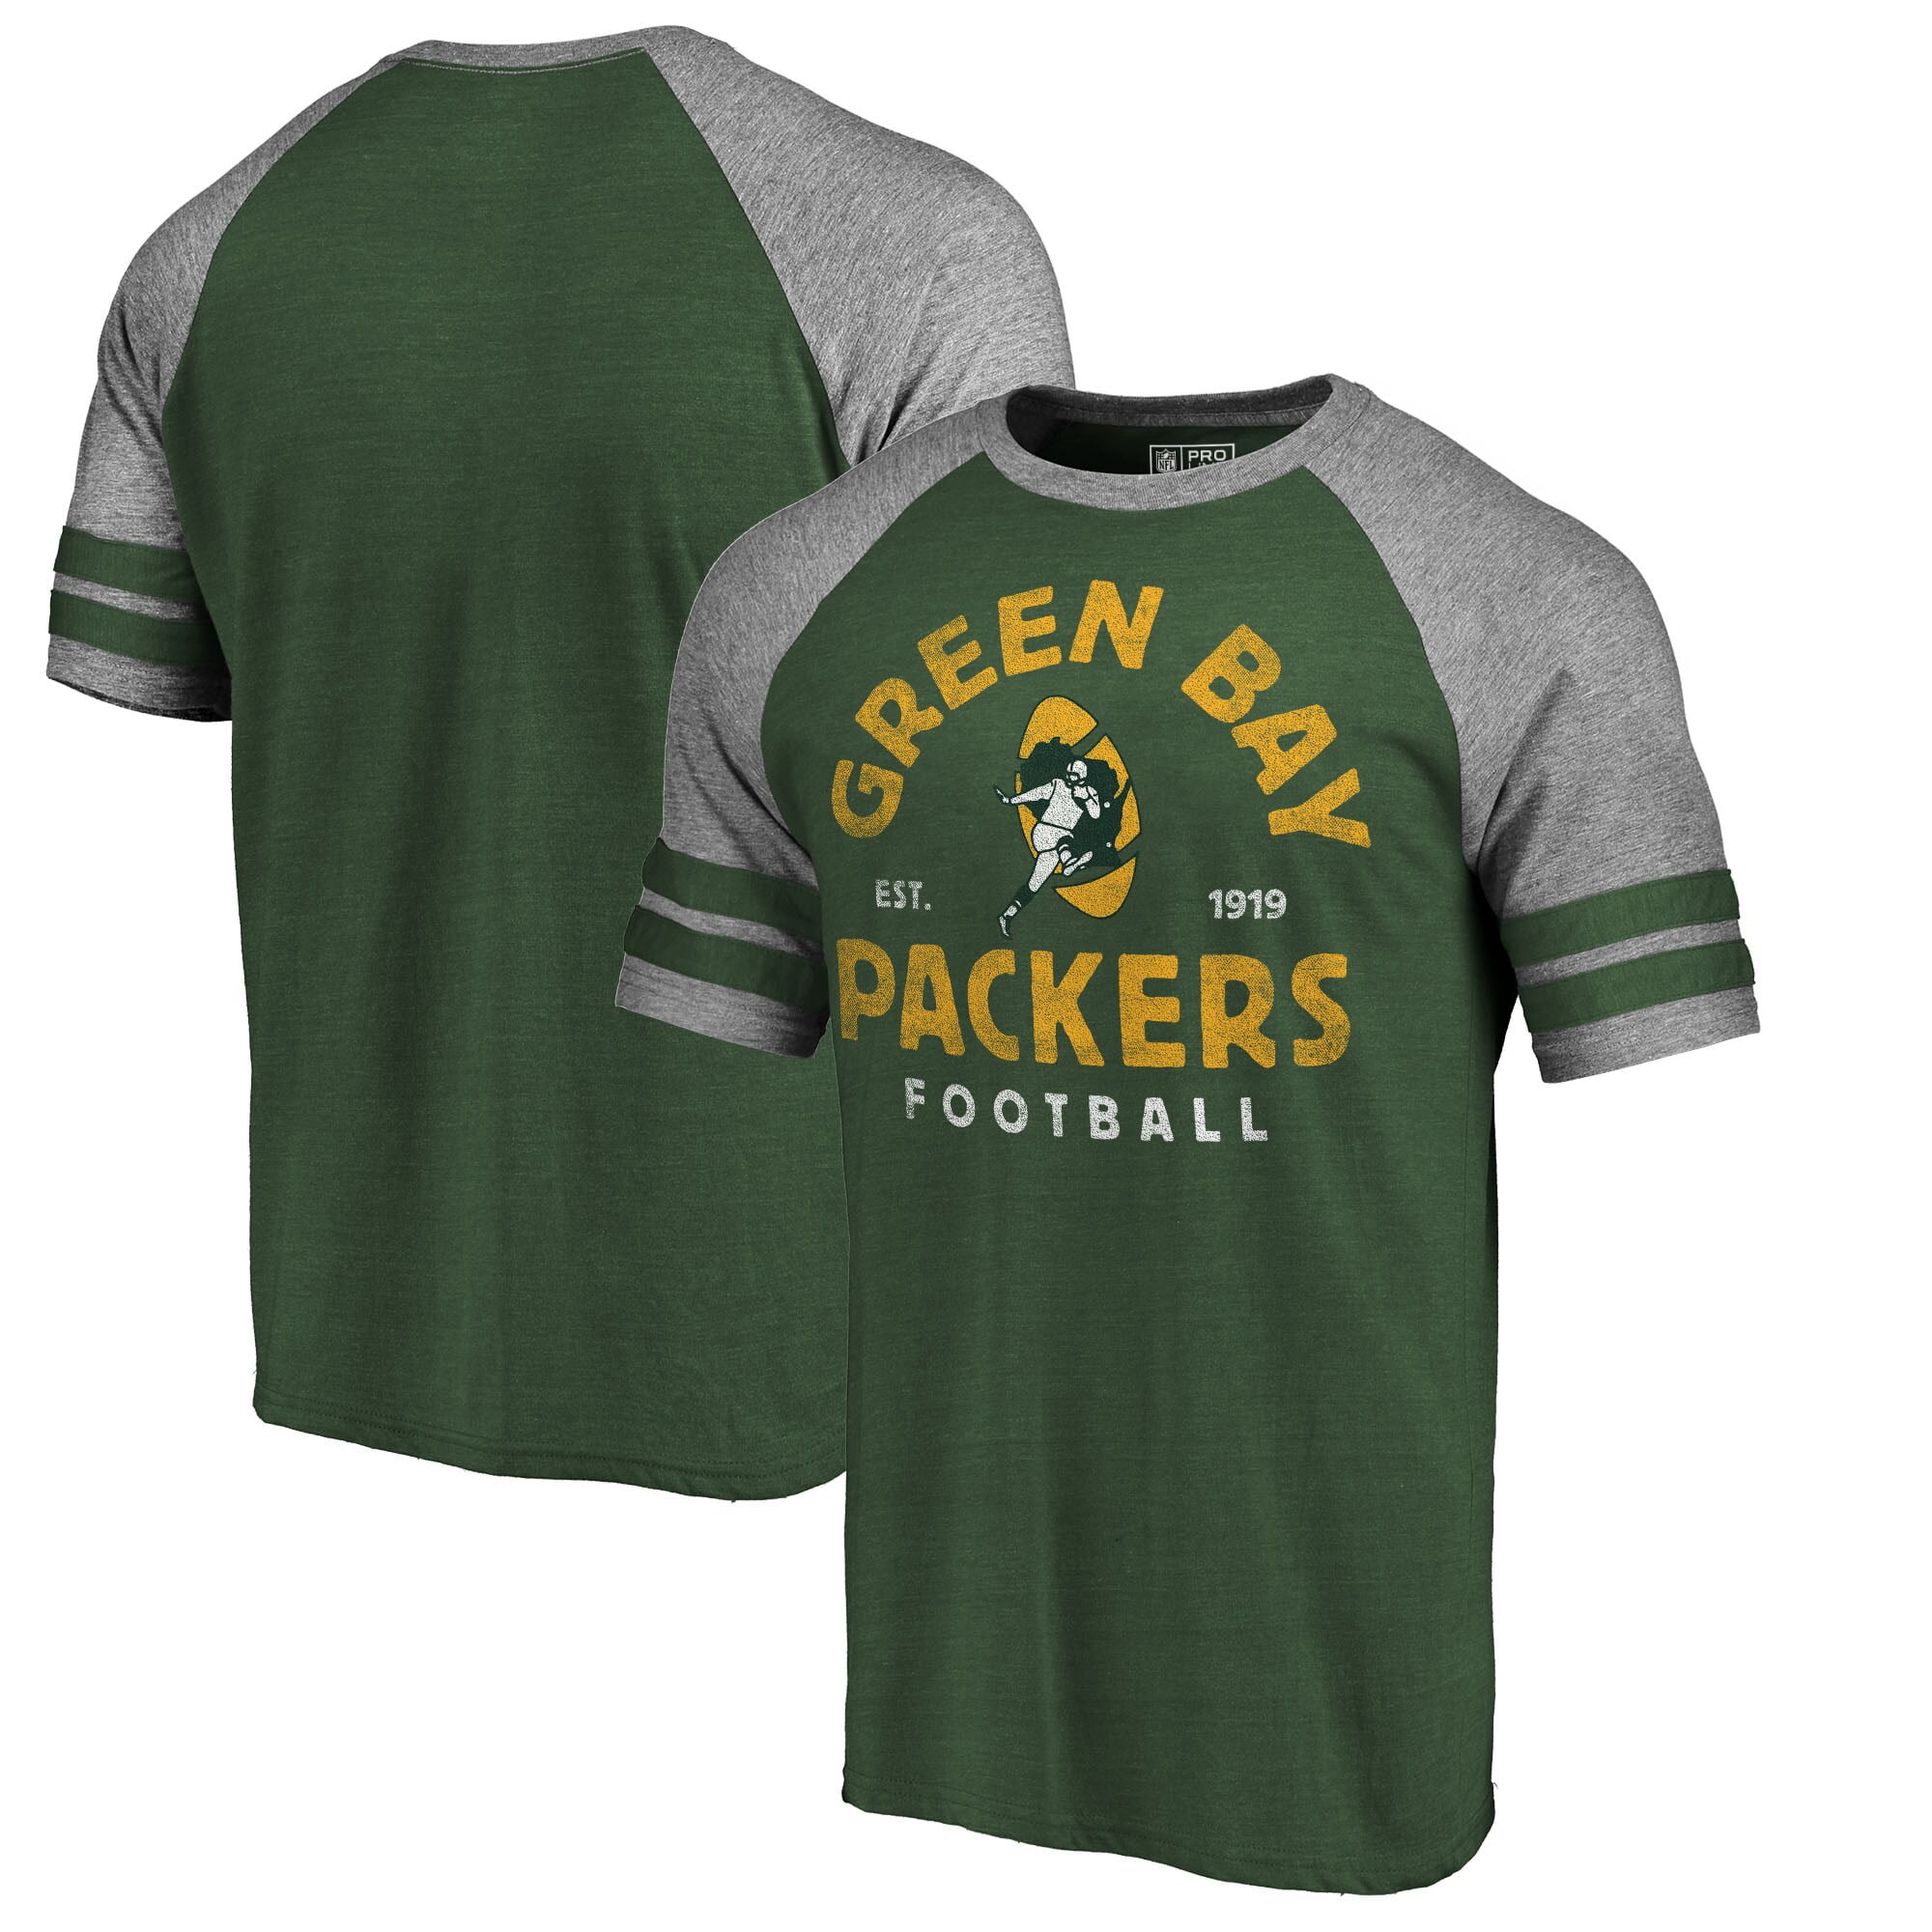 vintage green bay packers shirt